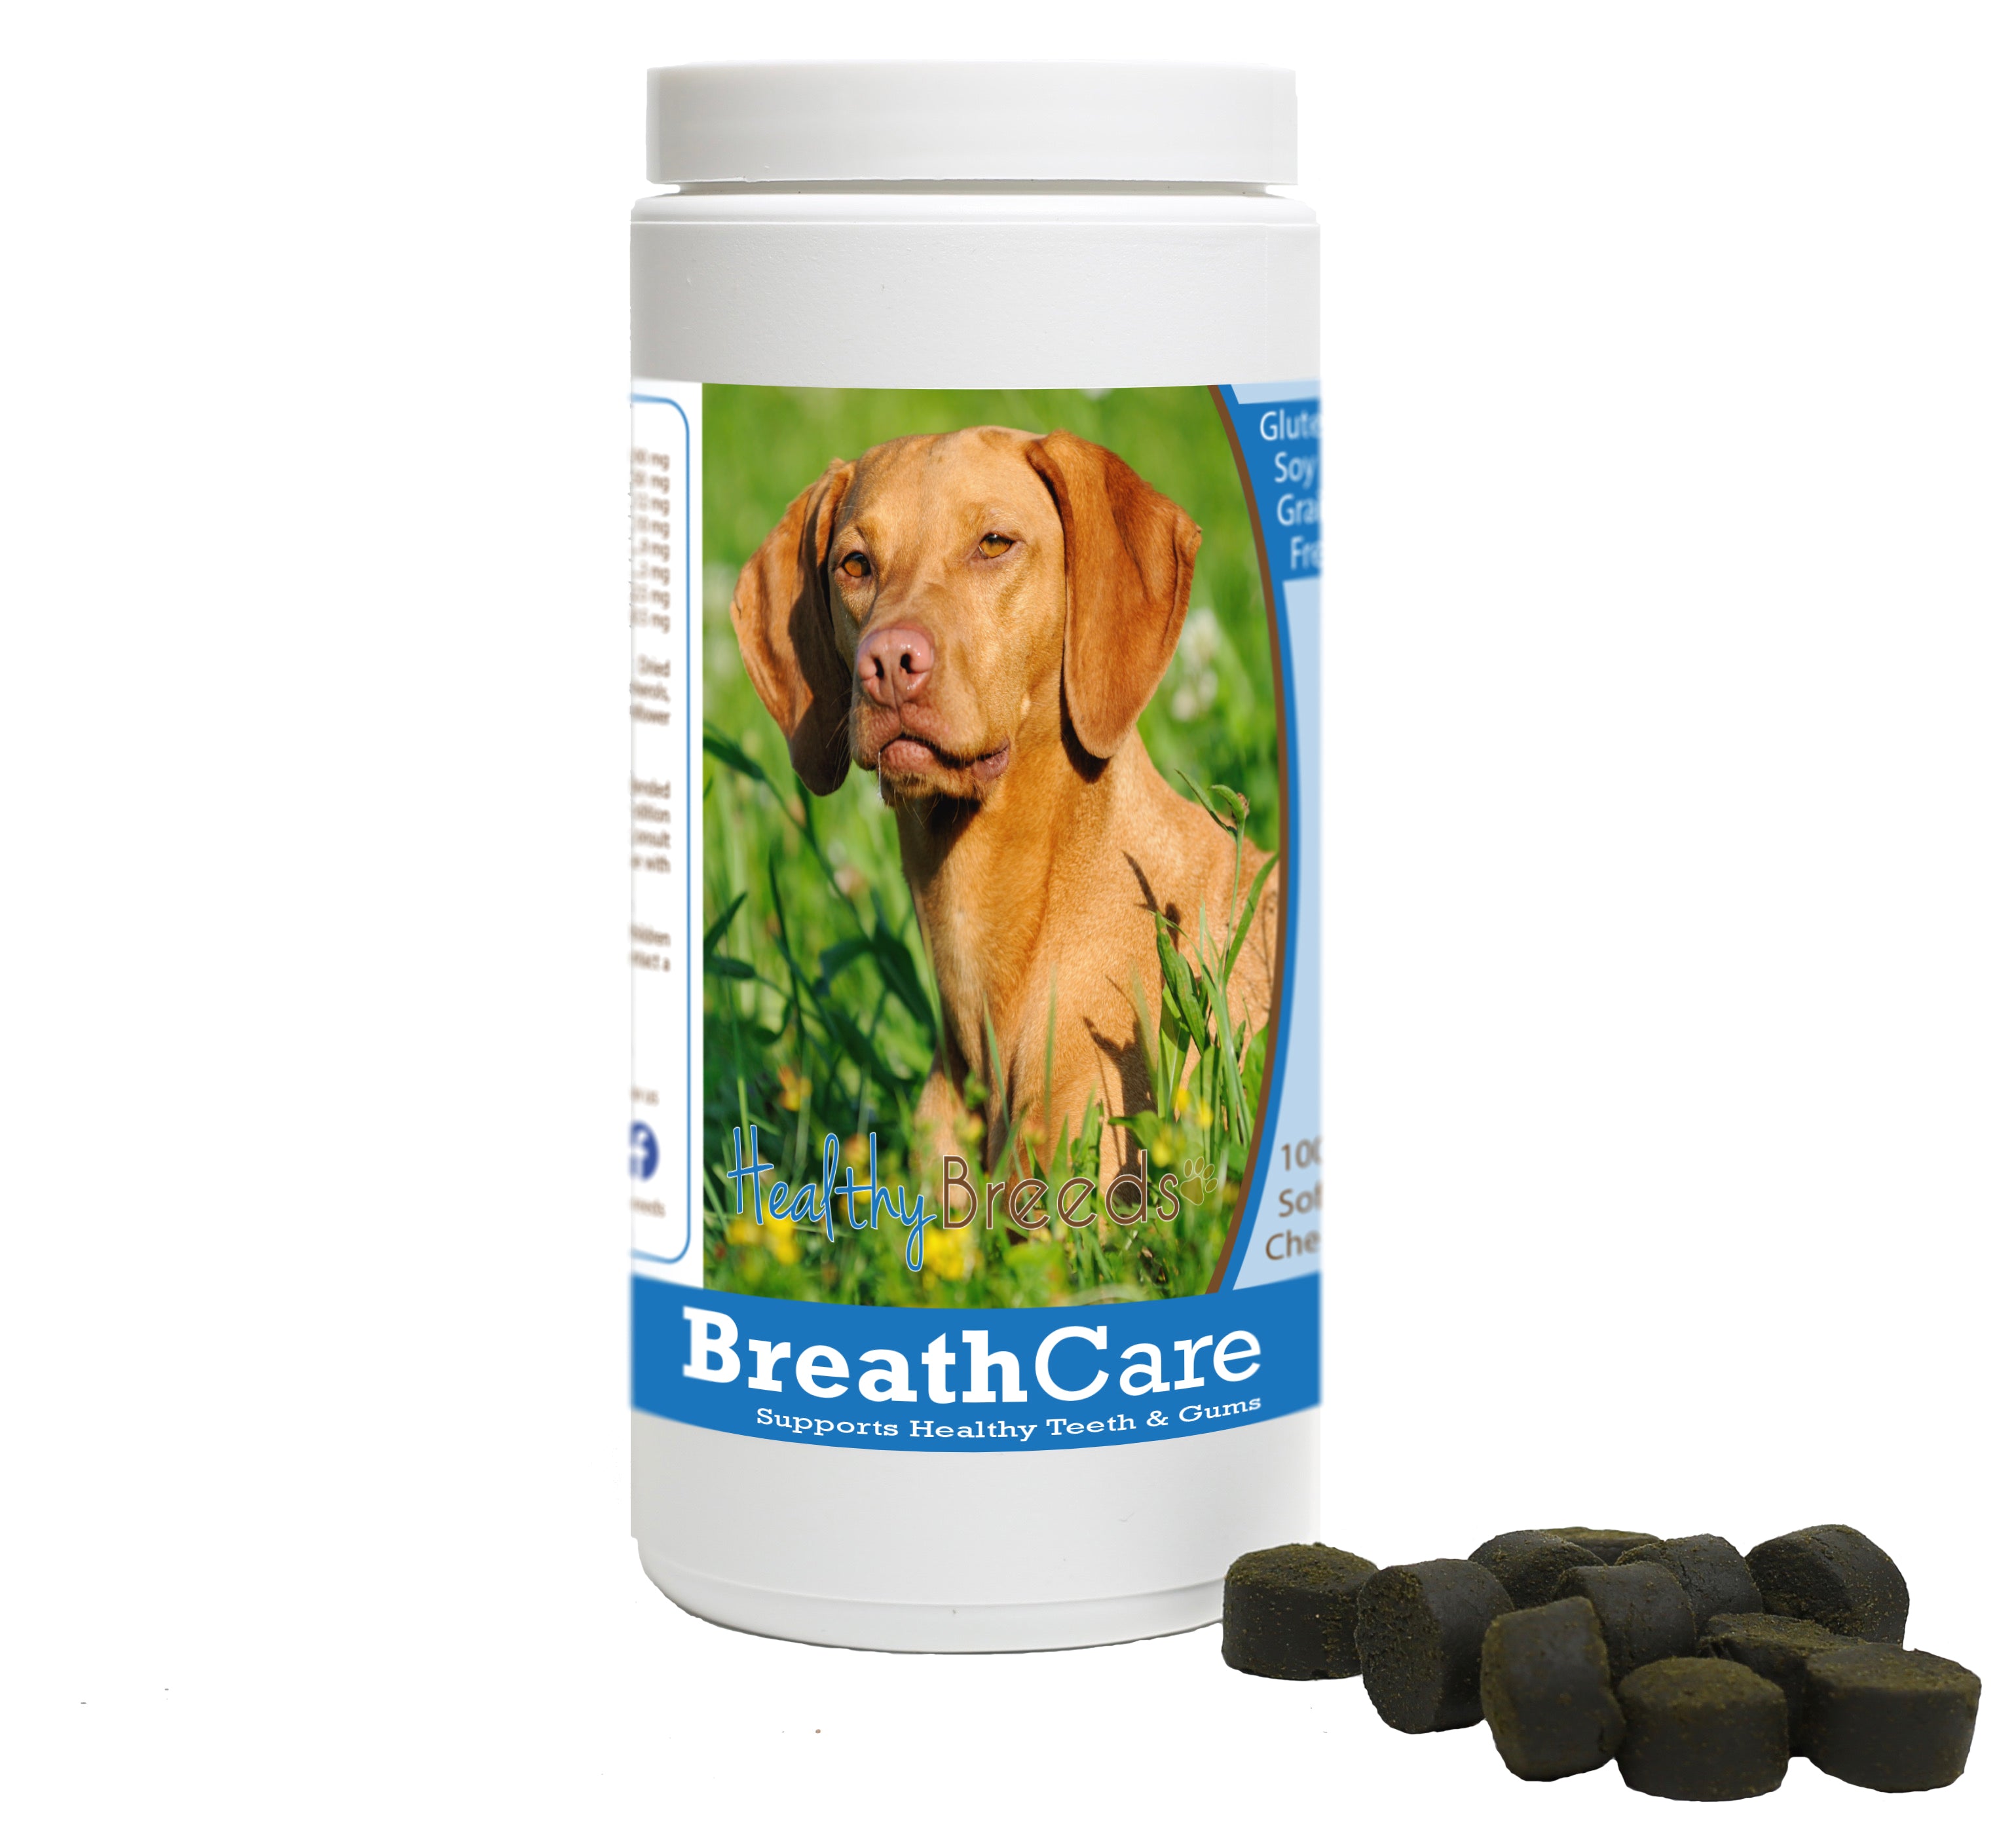 Vizsla Breath Care Soft Chews for Dogs 60 Count